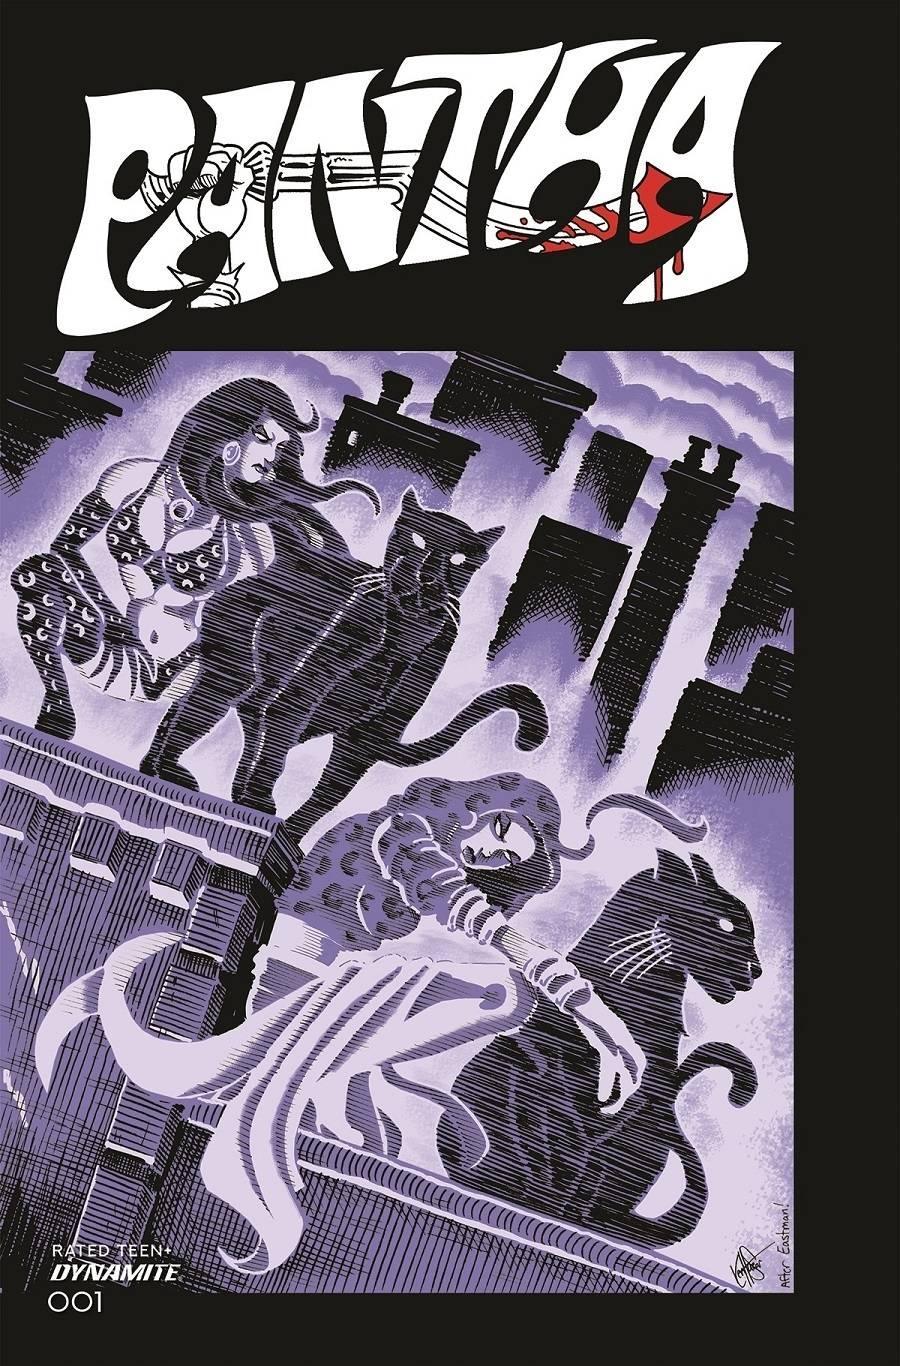 PANTHA VOL 3 #1 CVR P FOC TMNT HOMAGE HAESER ORIGINAL - Kings Comics